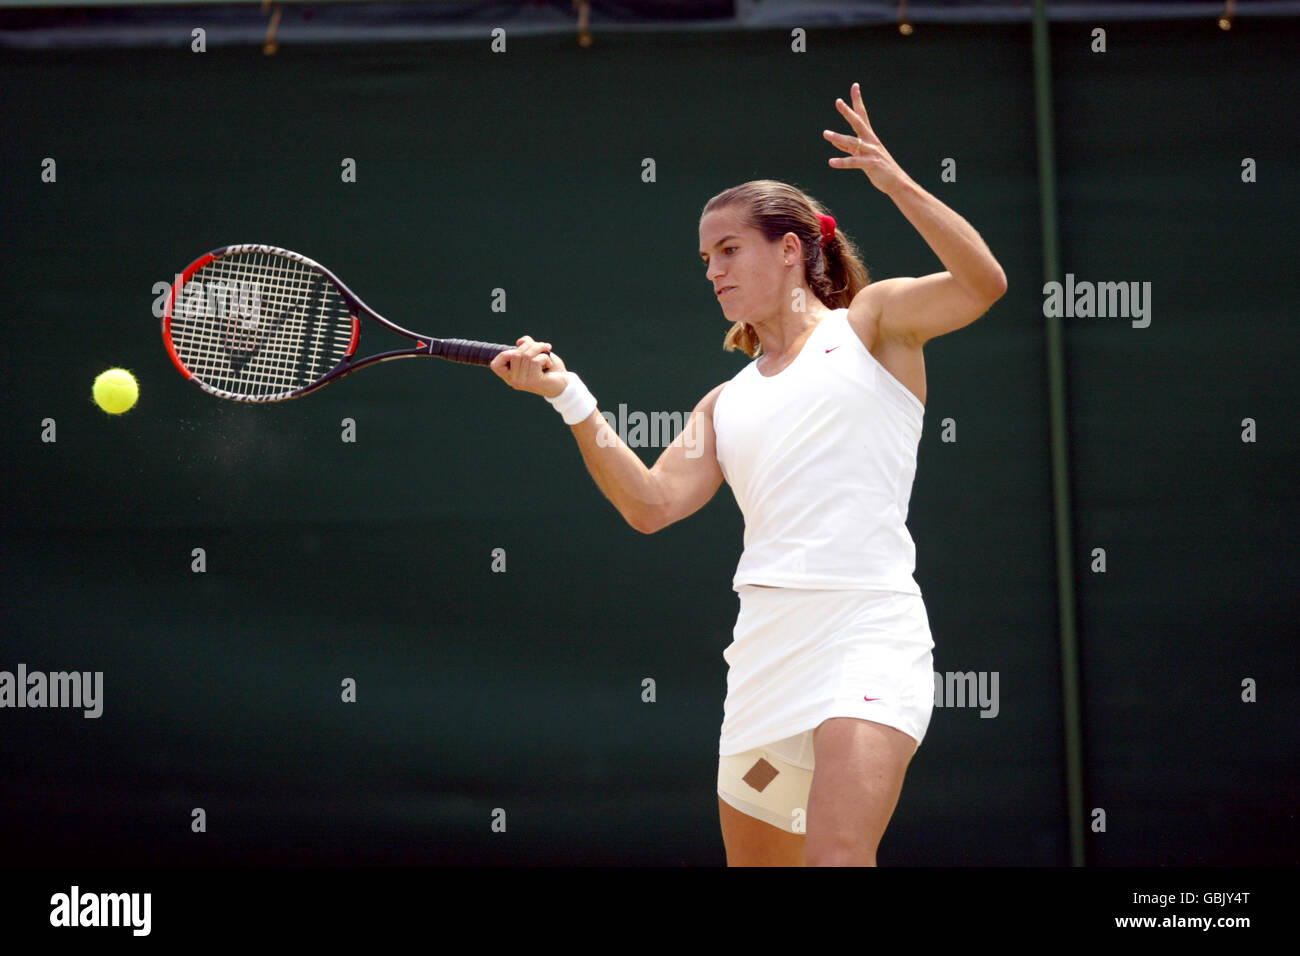 Tennis - Wimbledon 2004 - quarto round - Amelie Mauresmo v Silvia Farina Elia Foto Stock